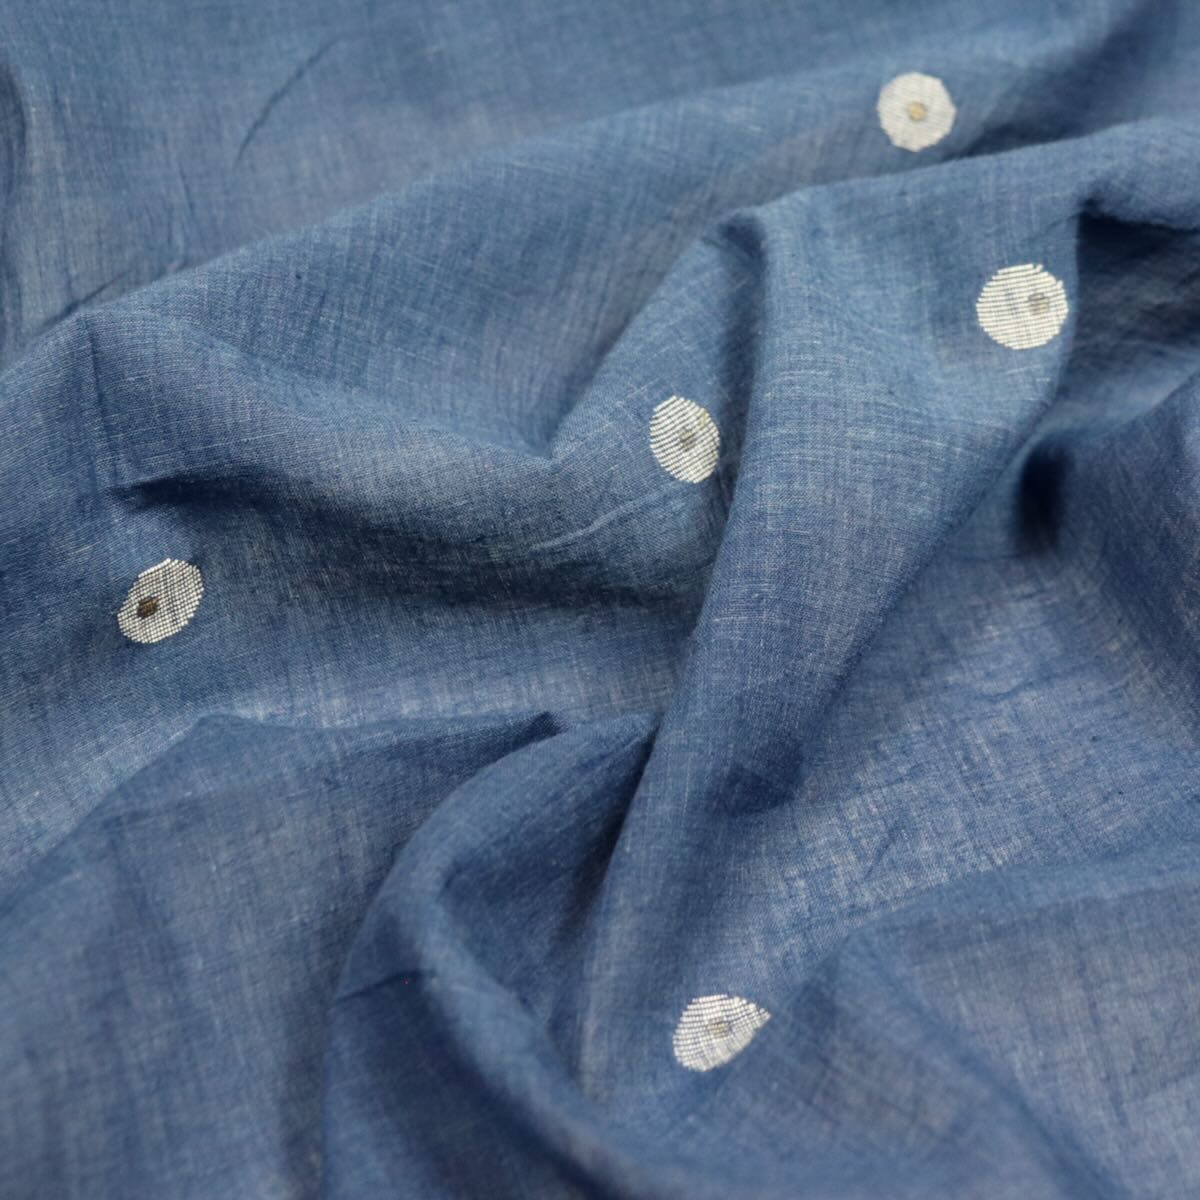 Swatch — Indigo Drop Jamdani Handloom Cotton